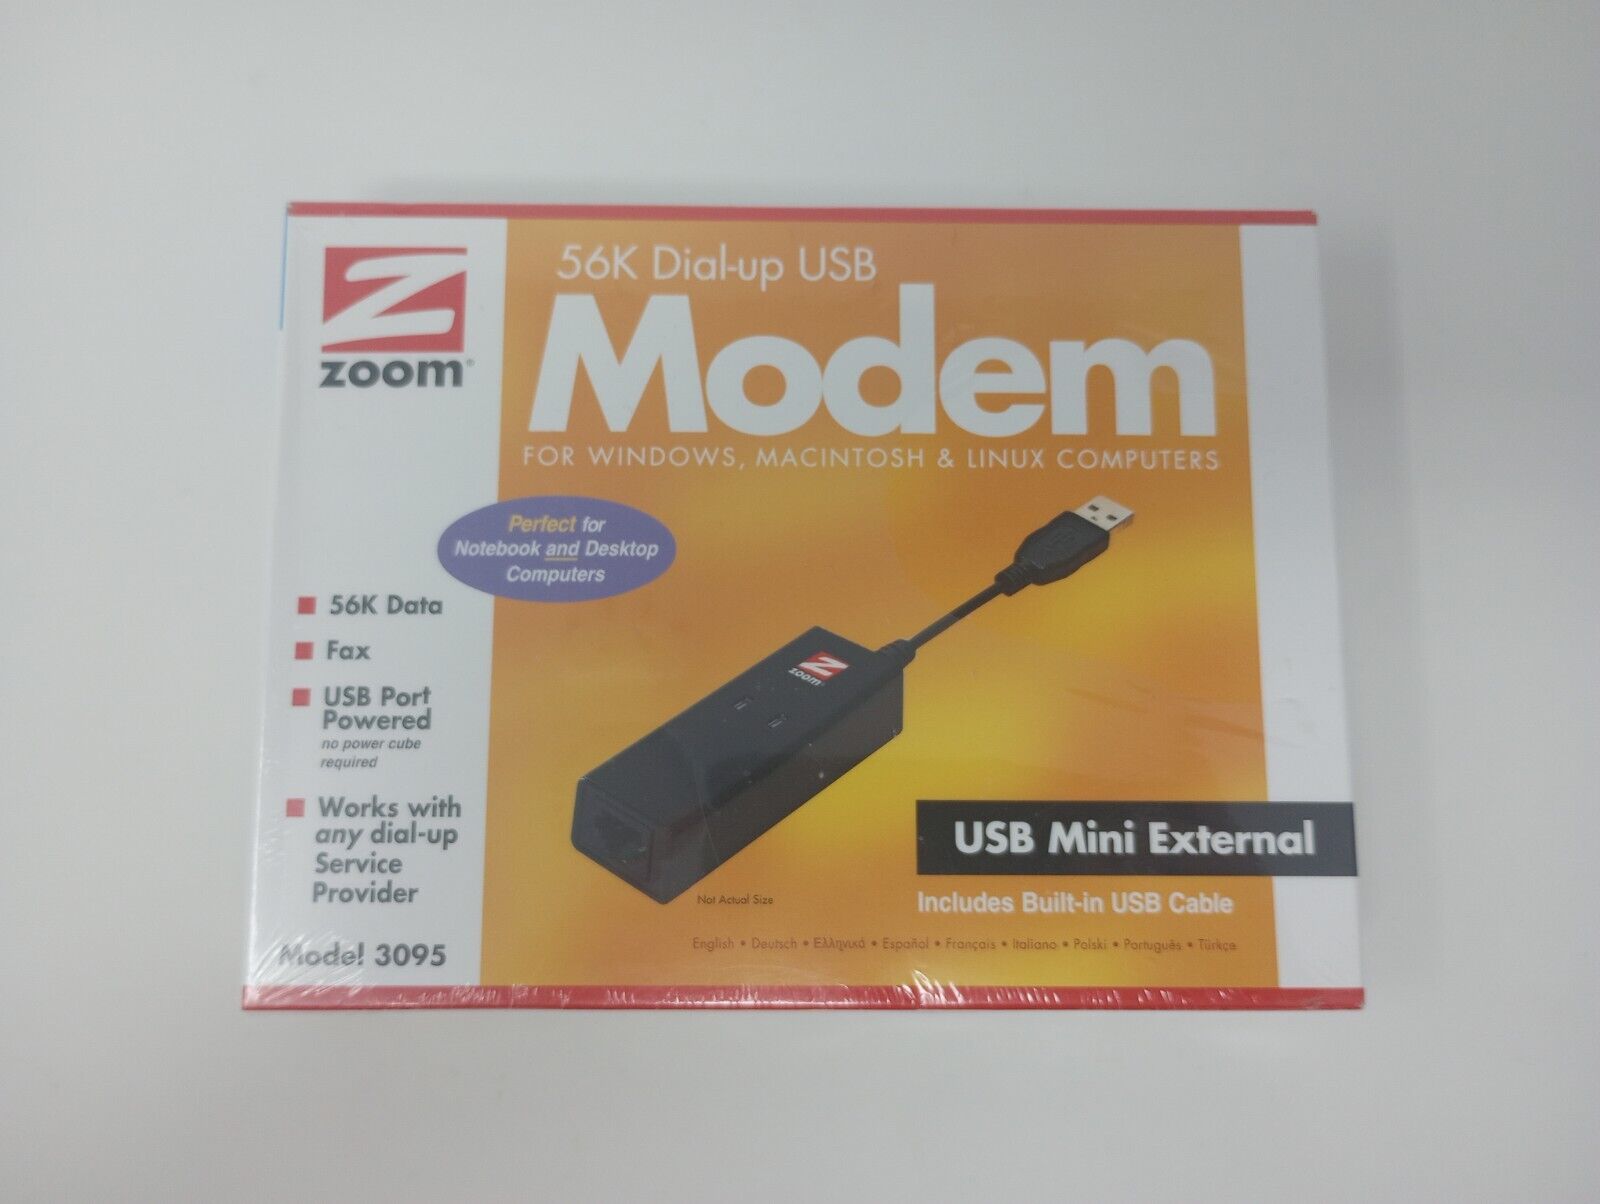 Zoom 56K Dial-up USB Modem for Windows, Macintosh, & Linux Model 3095 Brand NEW 